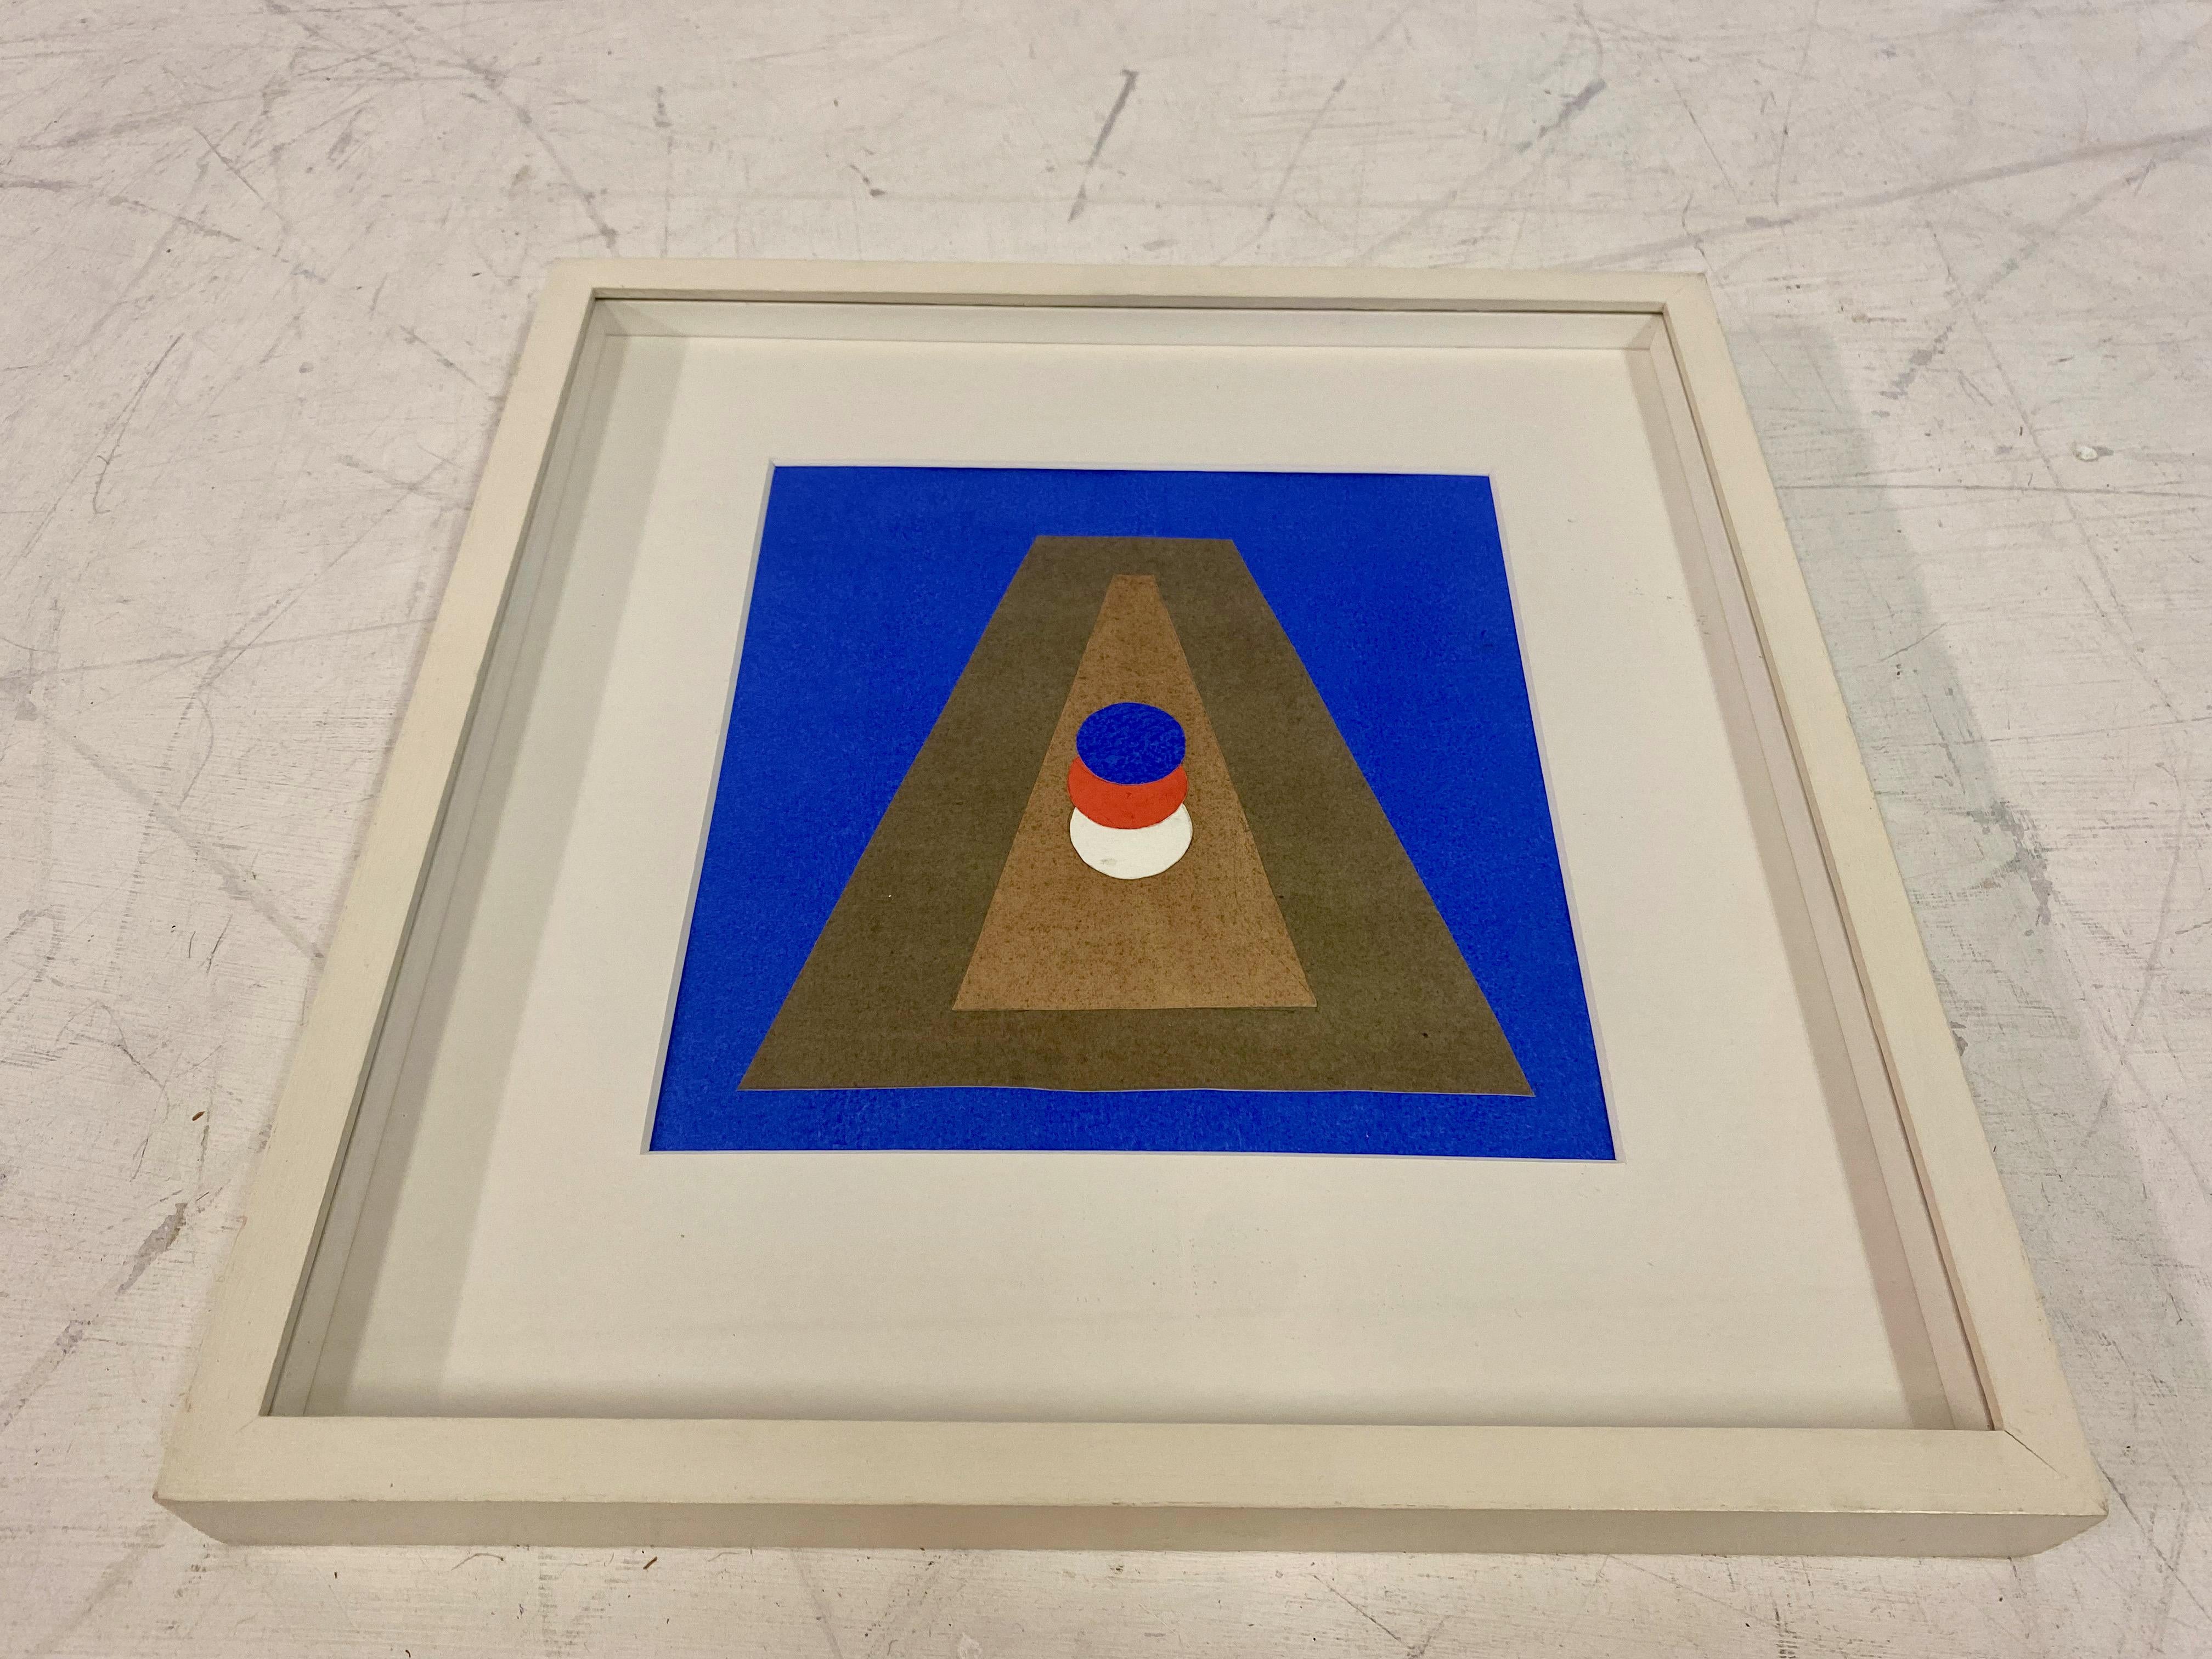 'Pyramide im Blau' 1973

By Italo Valenti (1912-1995)

Collage and gouache on paper

Collage size 23 x 22 cm

Gillian Jason label verso